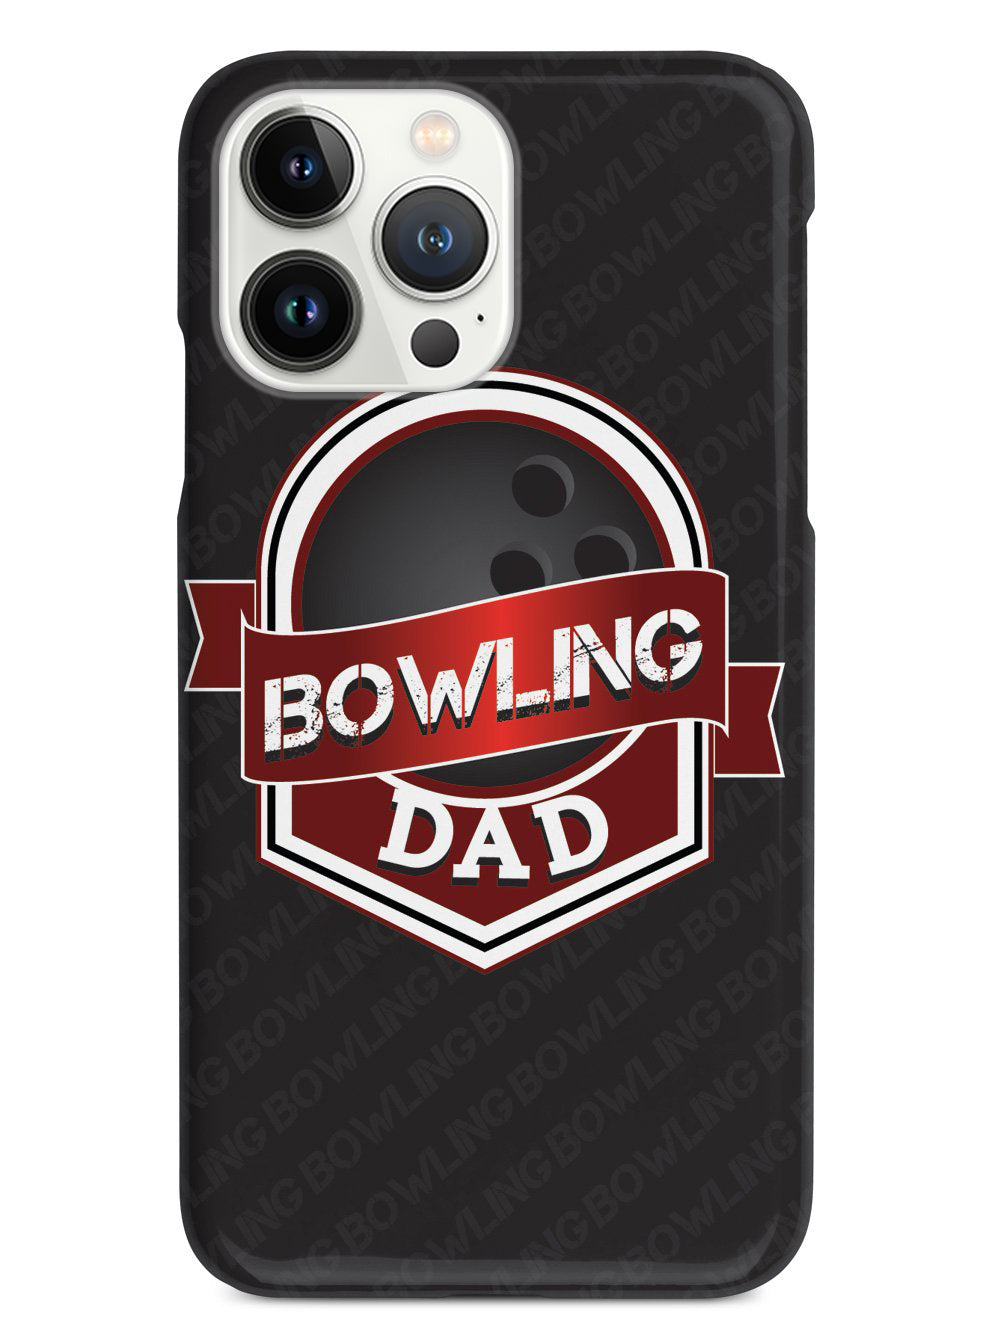 Bowling Dad Case